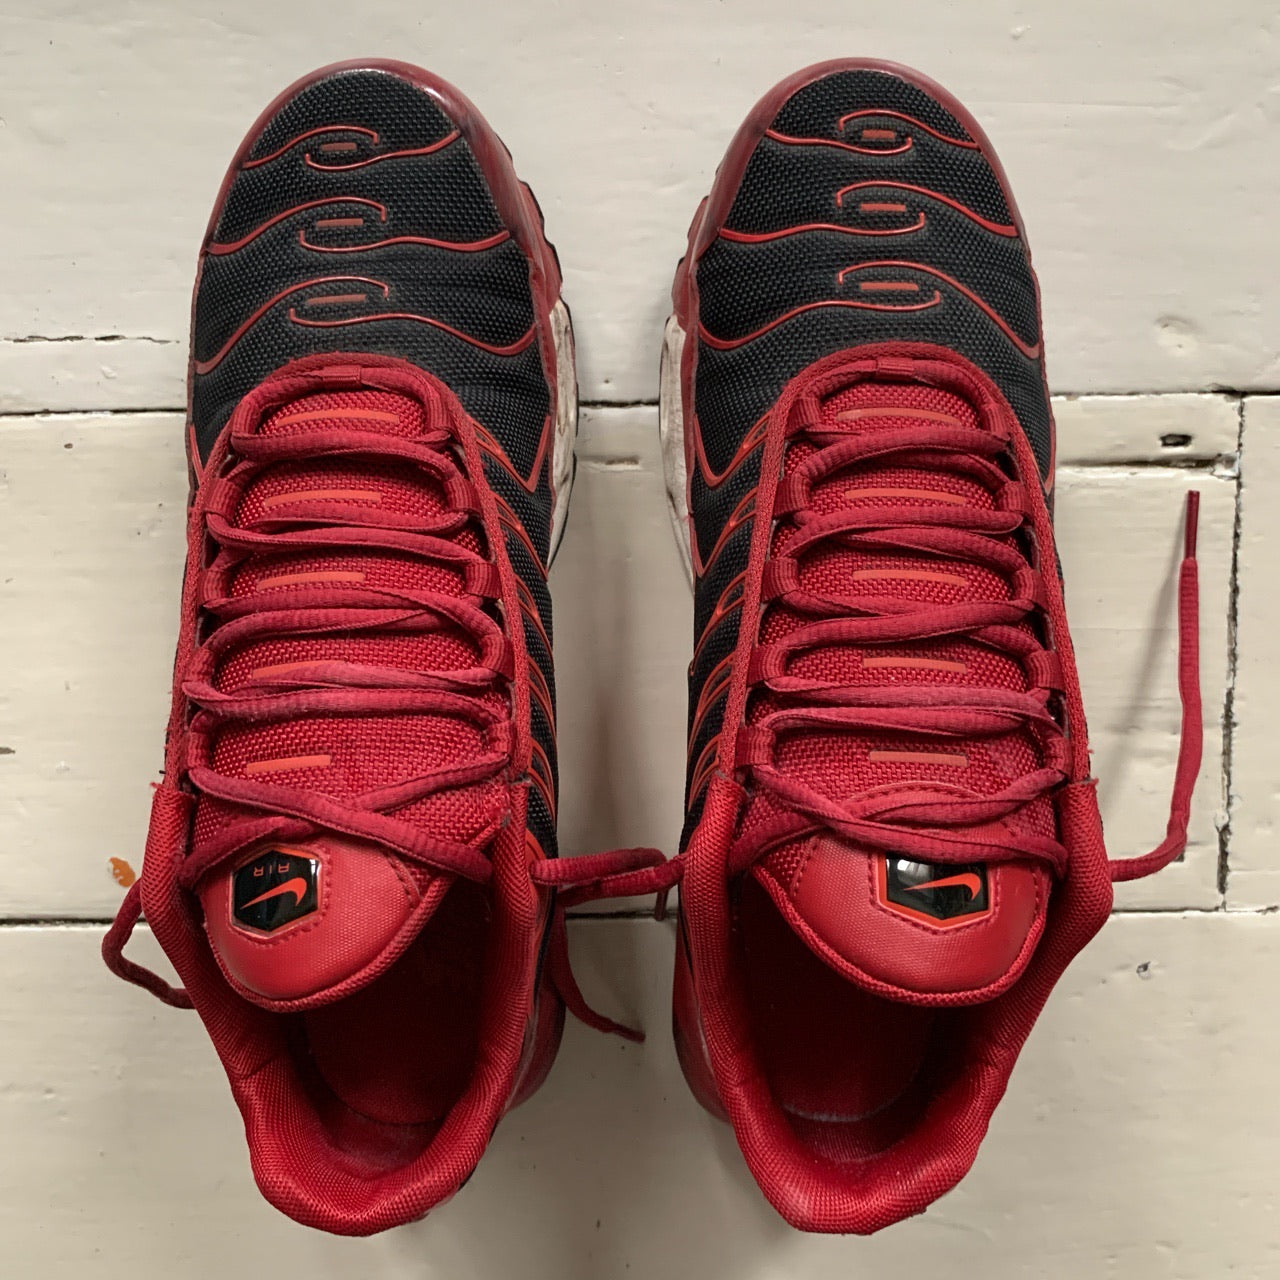 Nike TN Red and Black (UK 8.5)